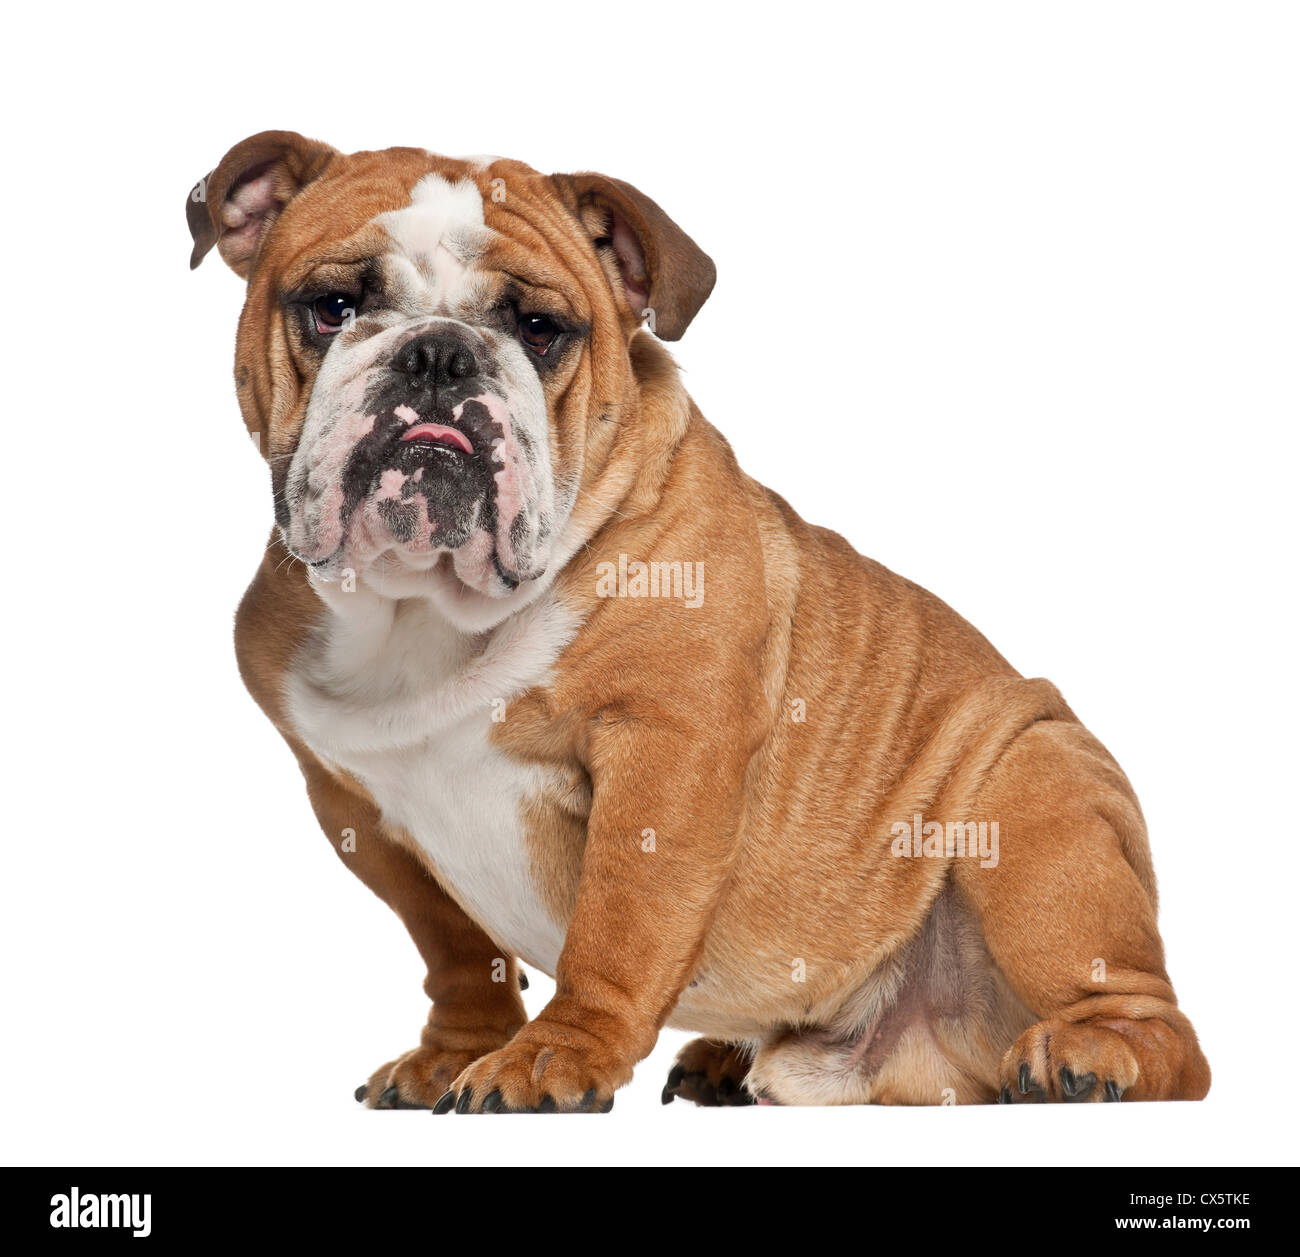 English Bulldog, 10 months old, sitting against white background Stock Photo